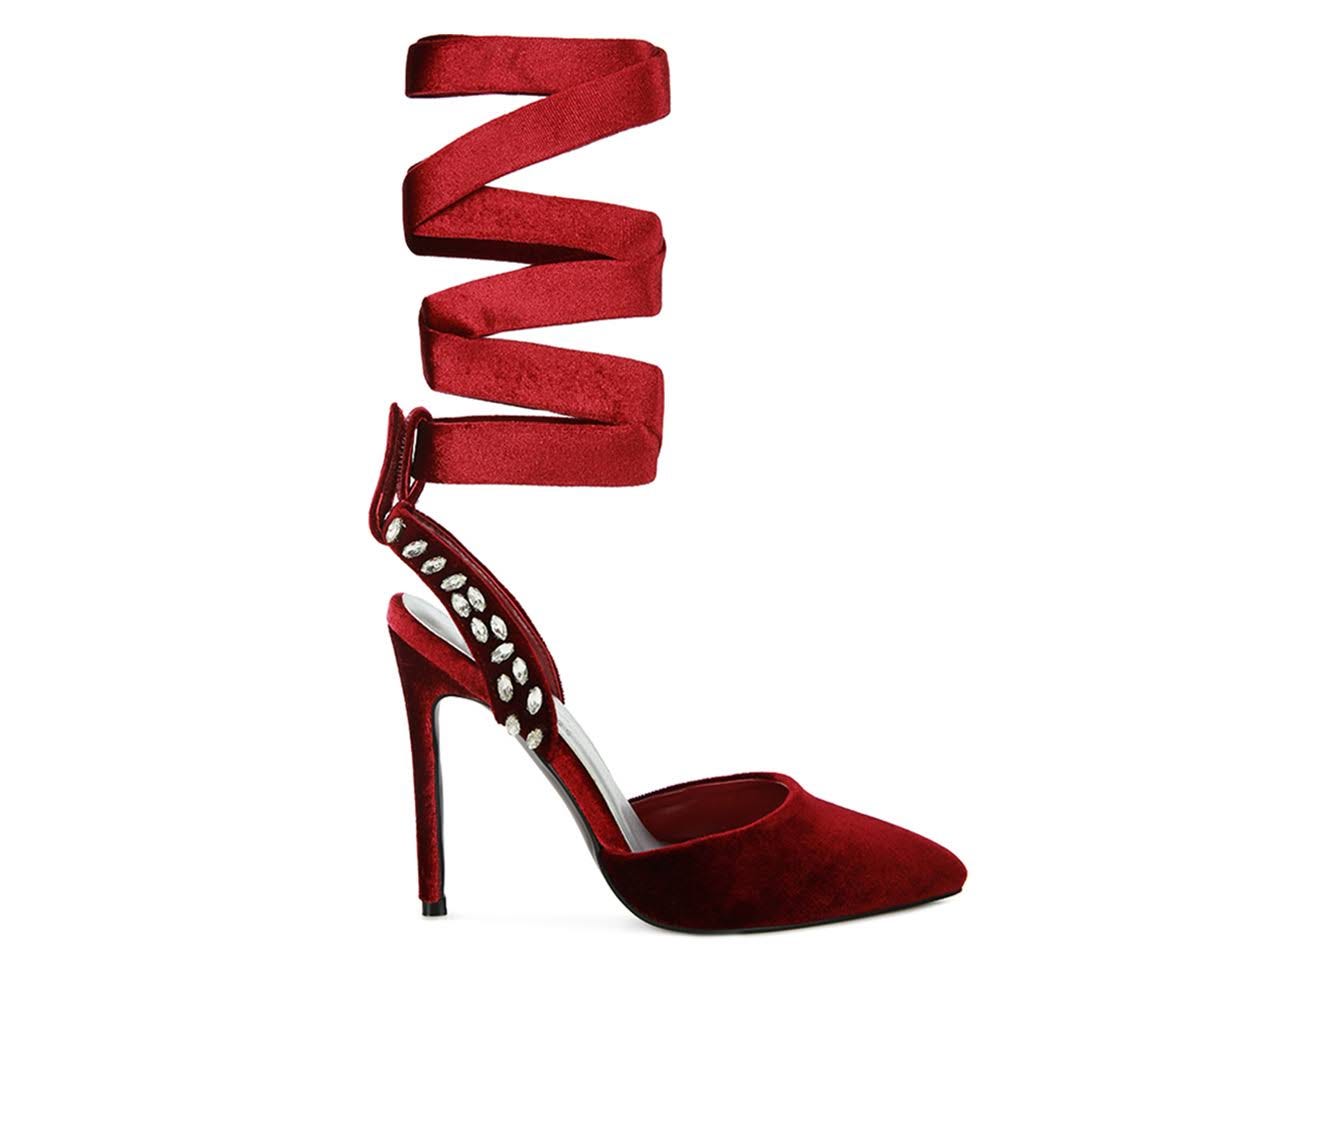 Chic Velvet Lace-Up Heels with Diamante Embellishments | Image